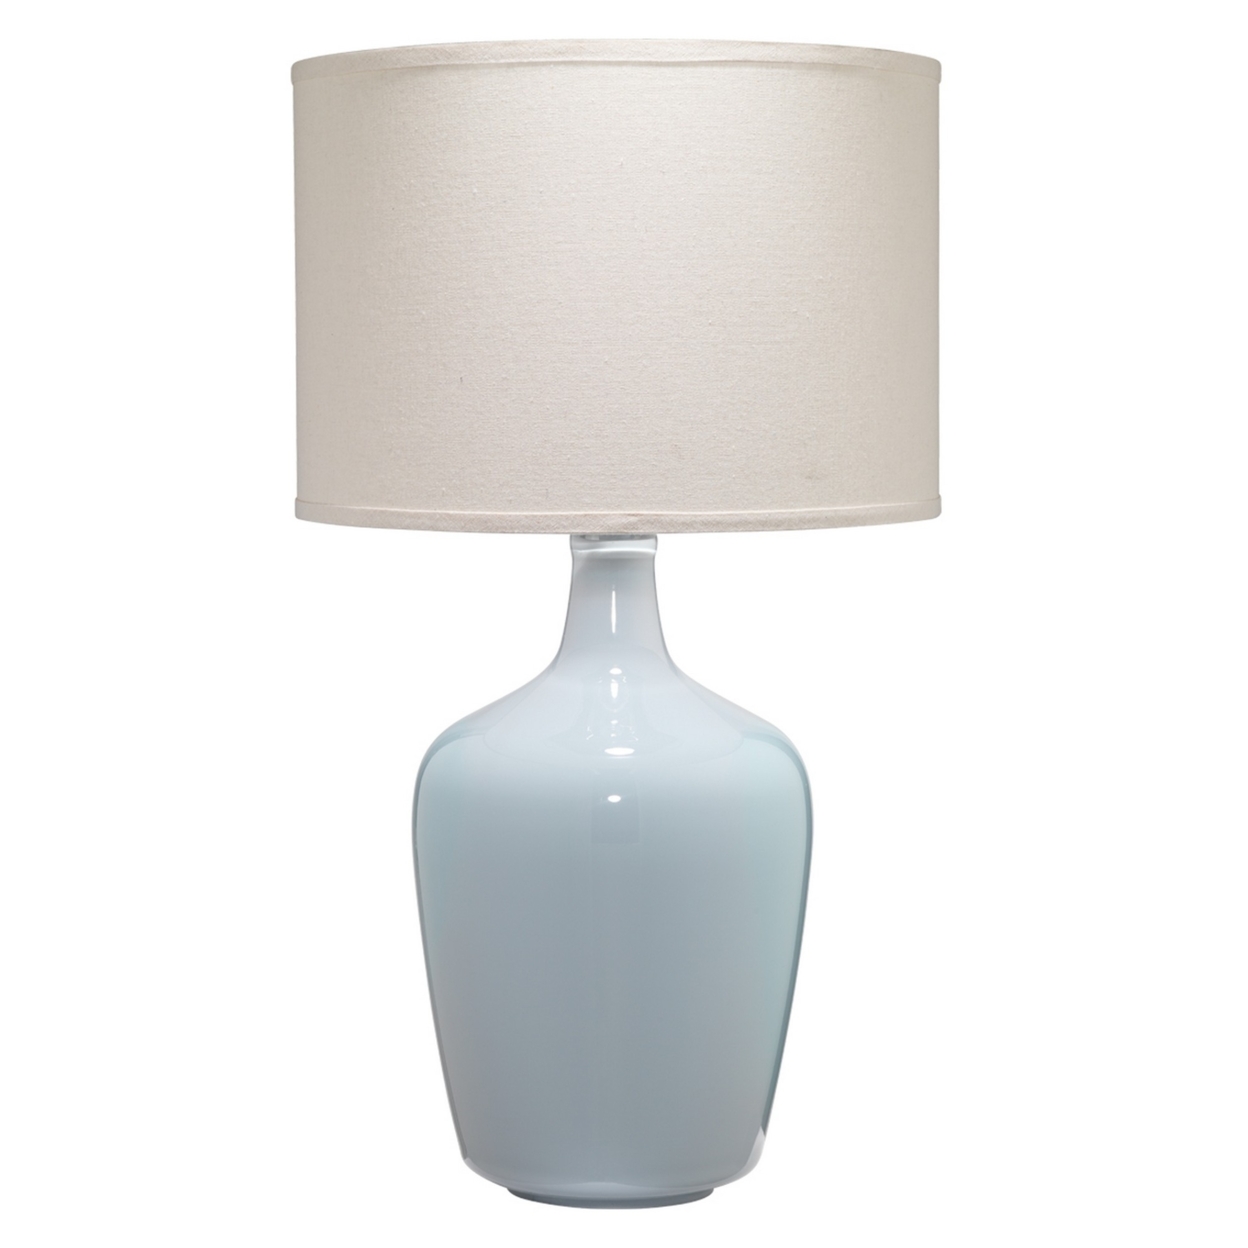 Table Lamp with Bellied Shape Ceramic Base, Gray- Saltoro Sherpi